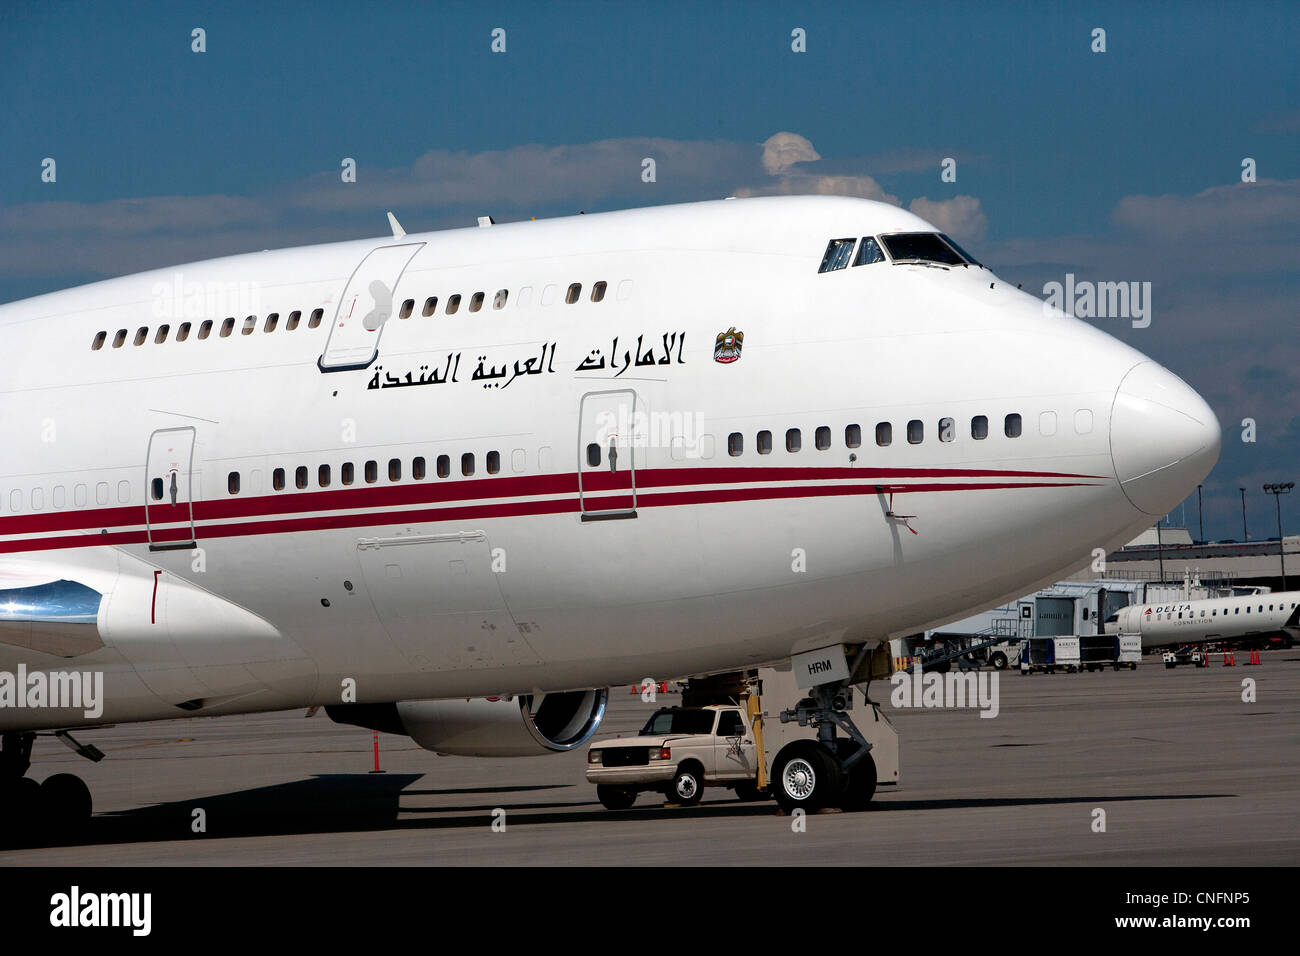 Boeing 747 du Cheik Mohammed Al Maktoum Blue Grass Airport, LEX, Lexington, Kentucky Banque D'Images